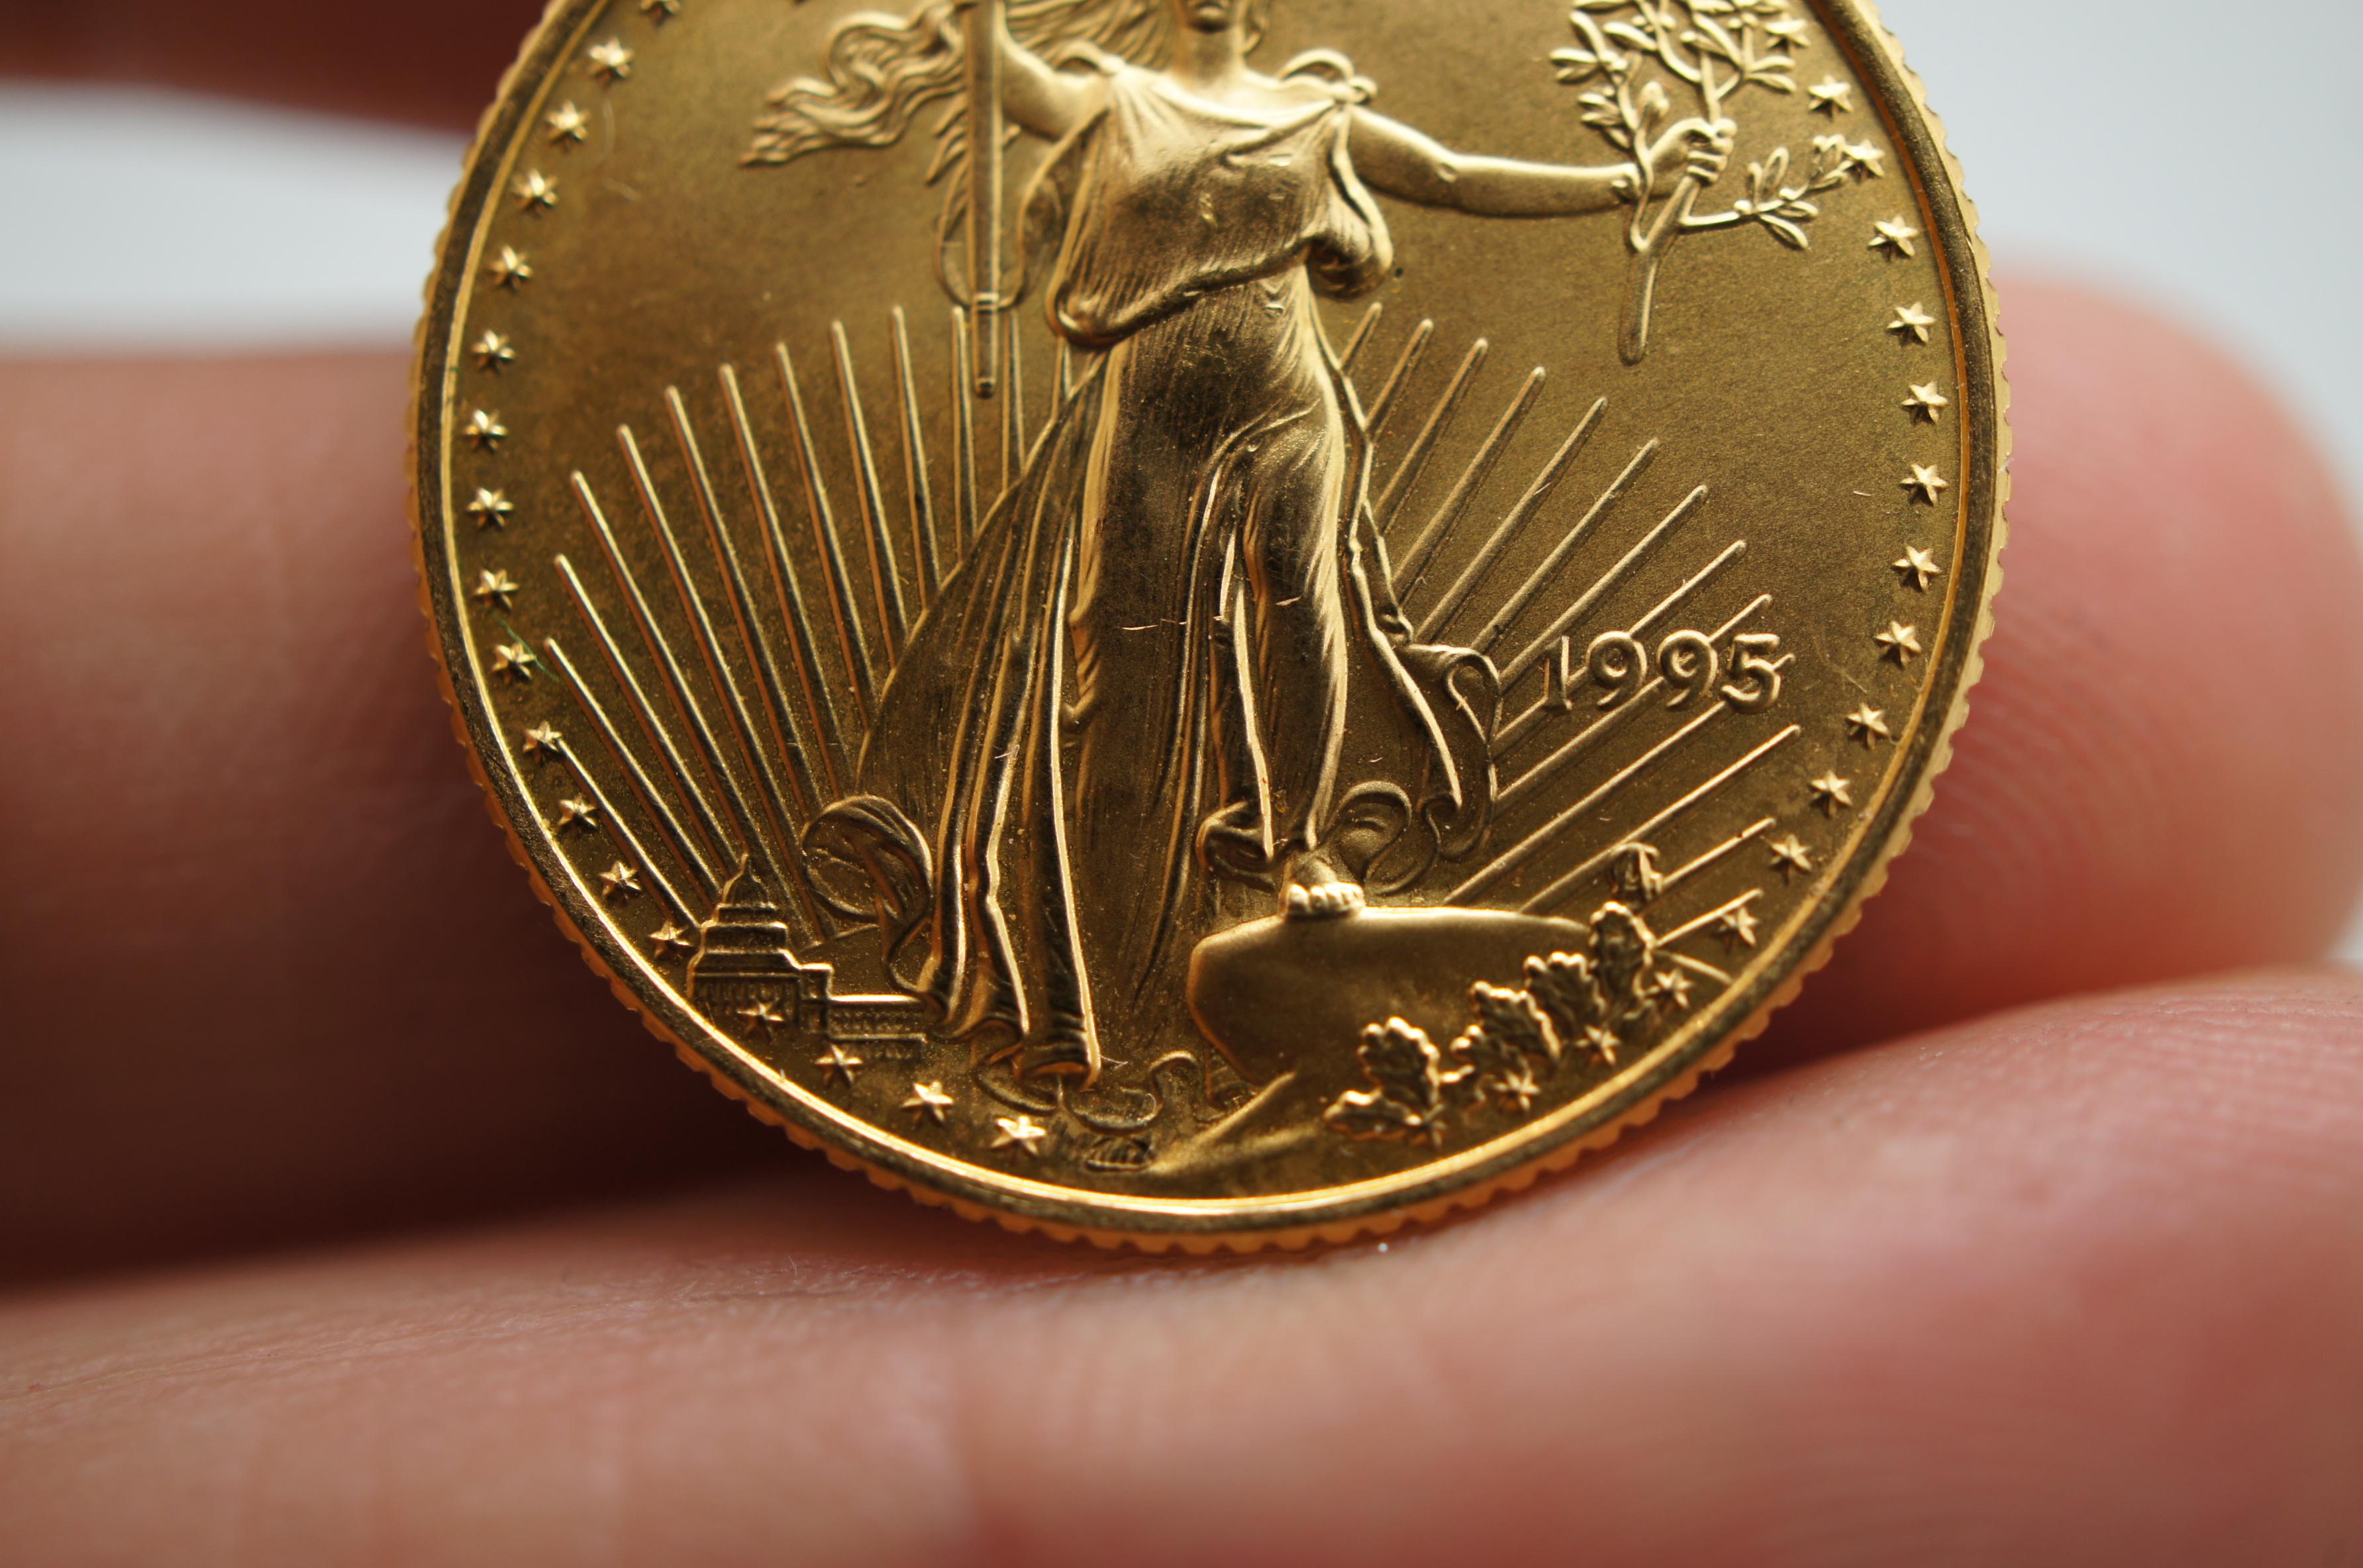 1995 American Liberty Eagle 1/4 oz 22K Fine $10 Goldmünze US Währung 8,5g (Ende des 20. Jahrhunderts) im Angebot